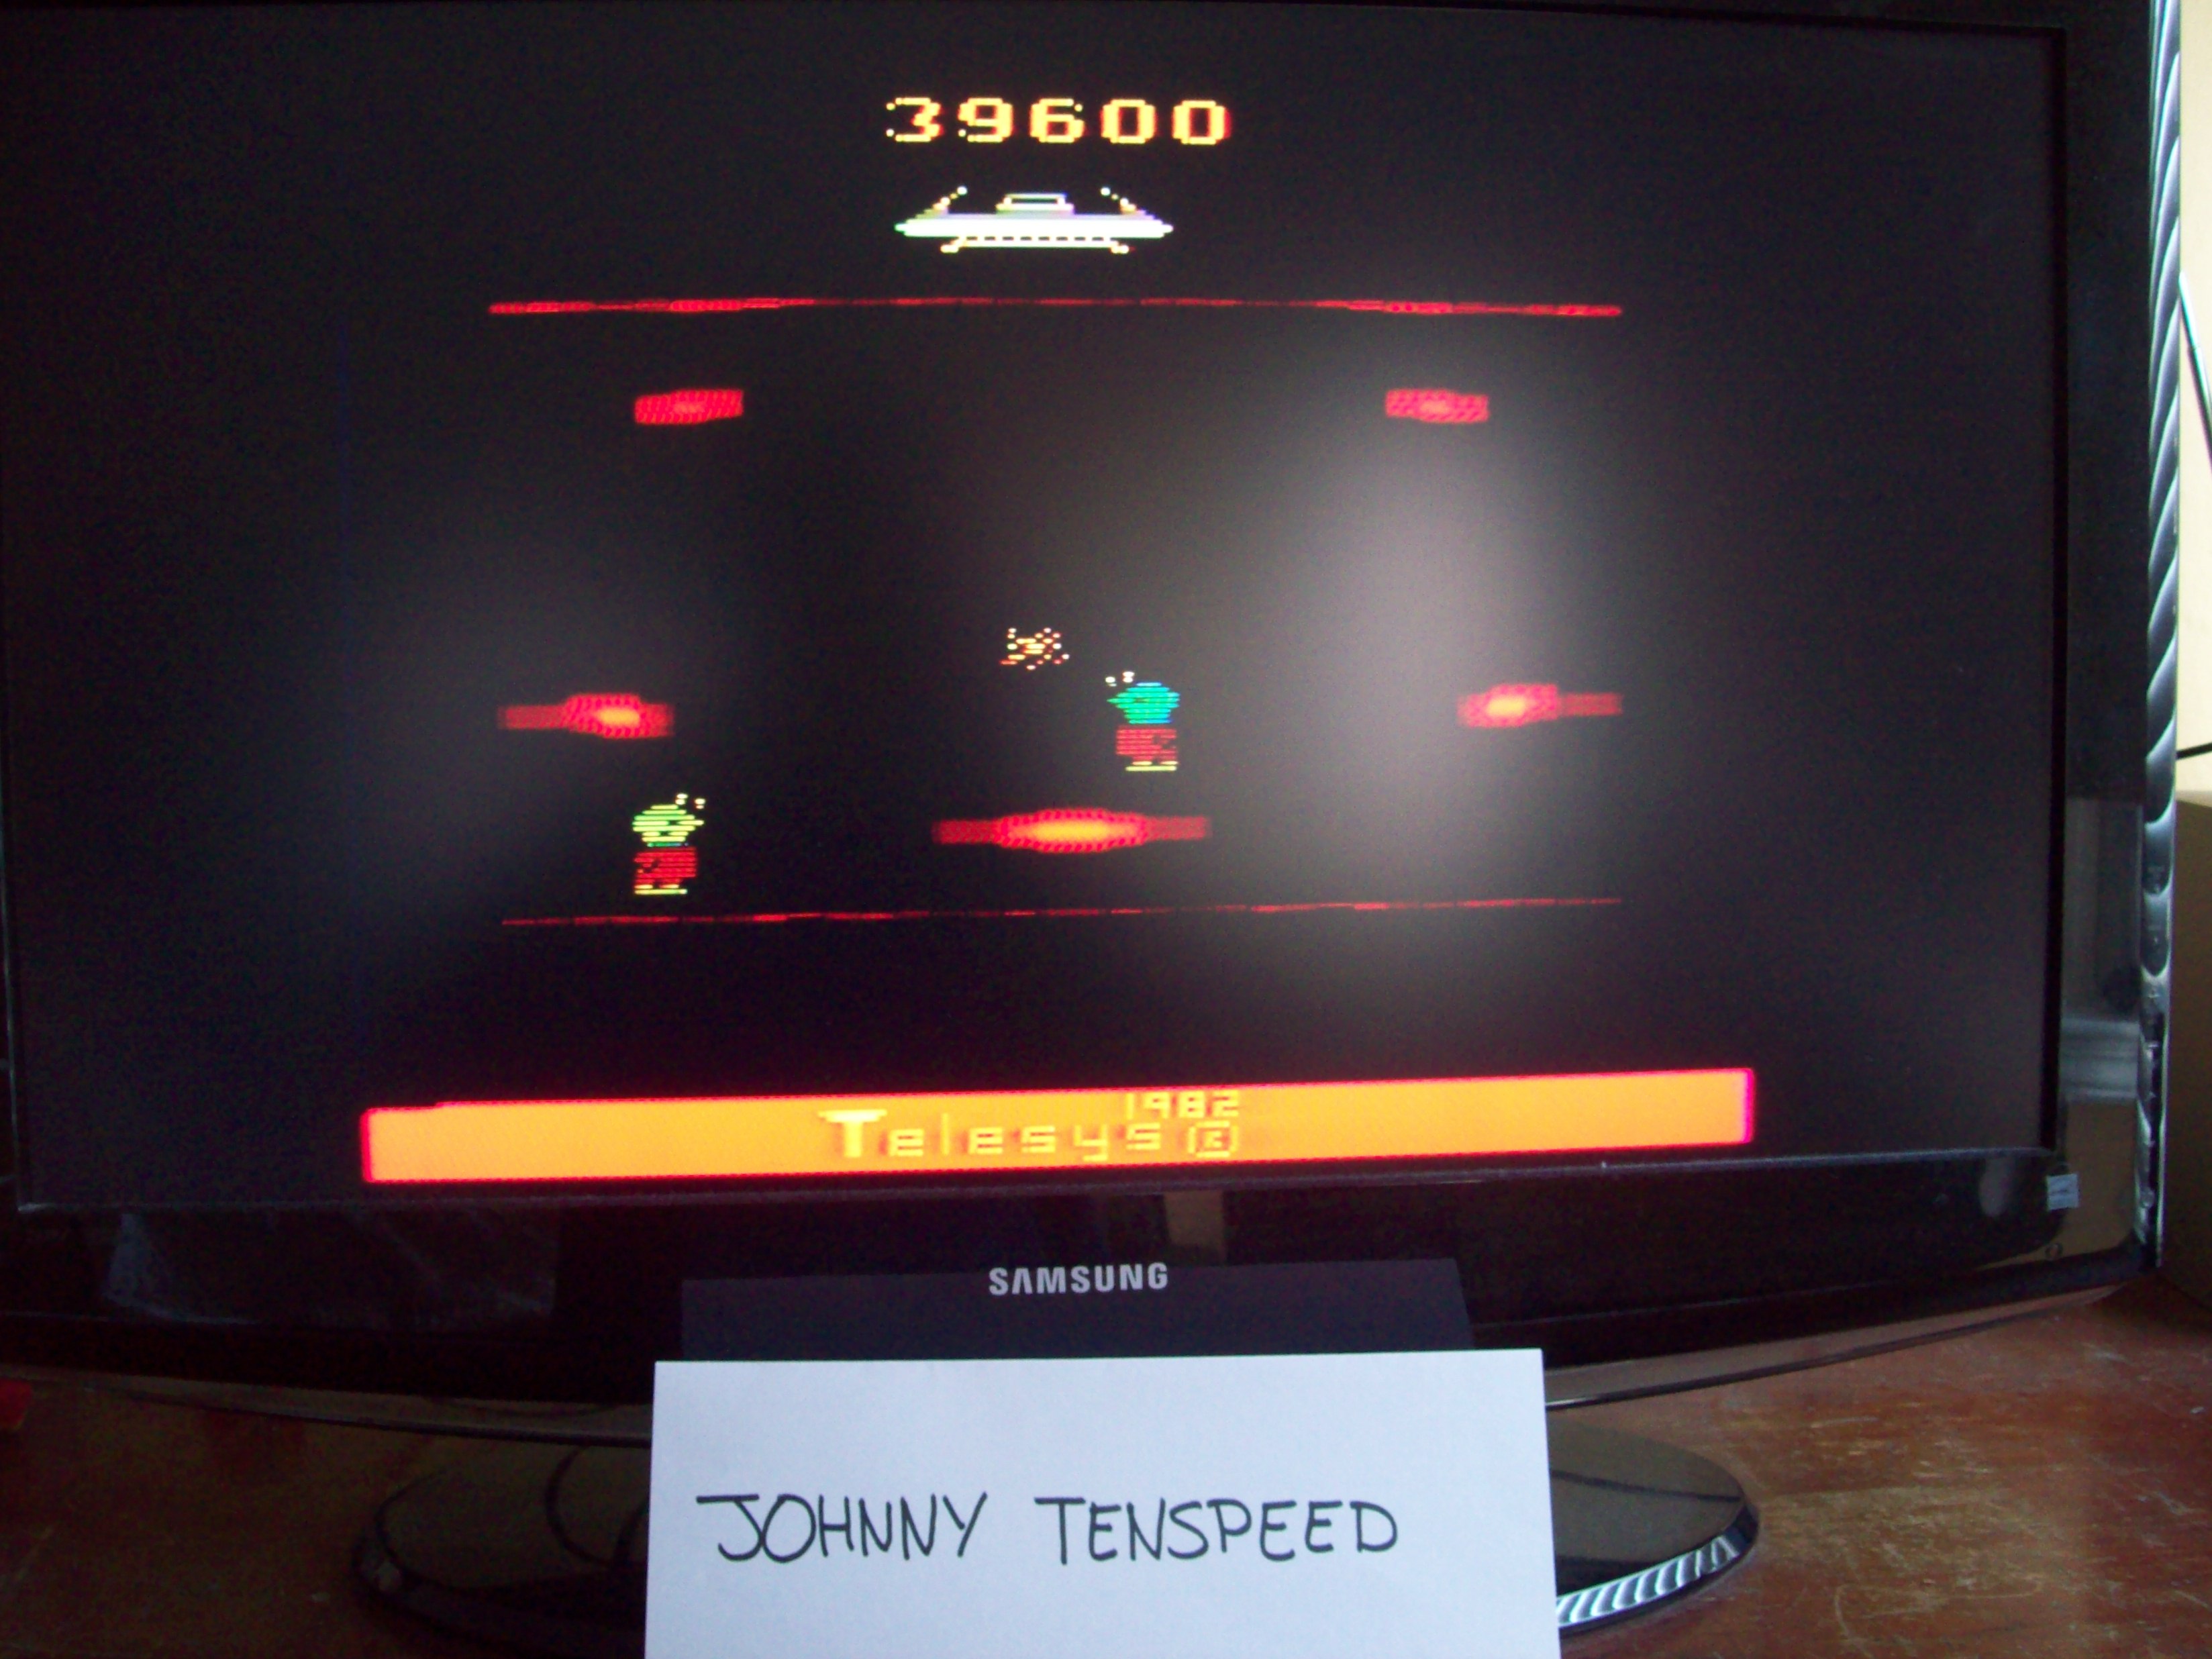 JohnnyTenspeed: Cosmic Creeps (Atari 2600) 39,600 points on 2015-03-02 17:31:24